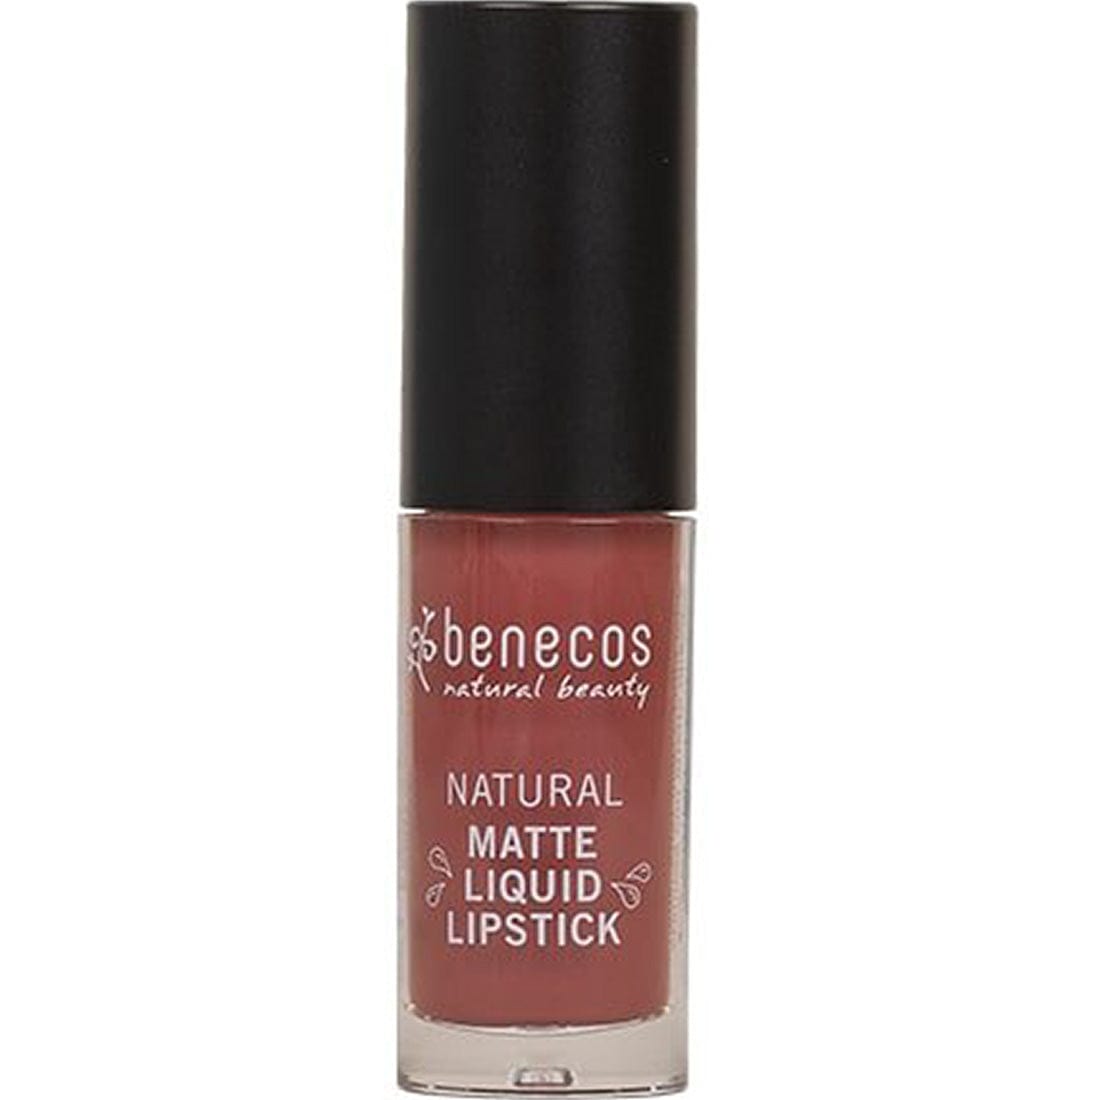 Benecos Matte Liquid Lipstick, 5ml